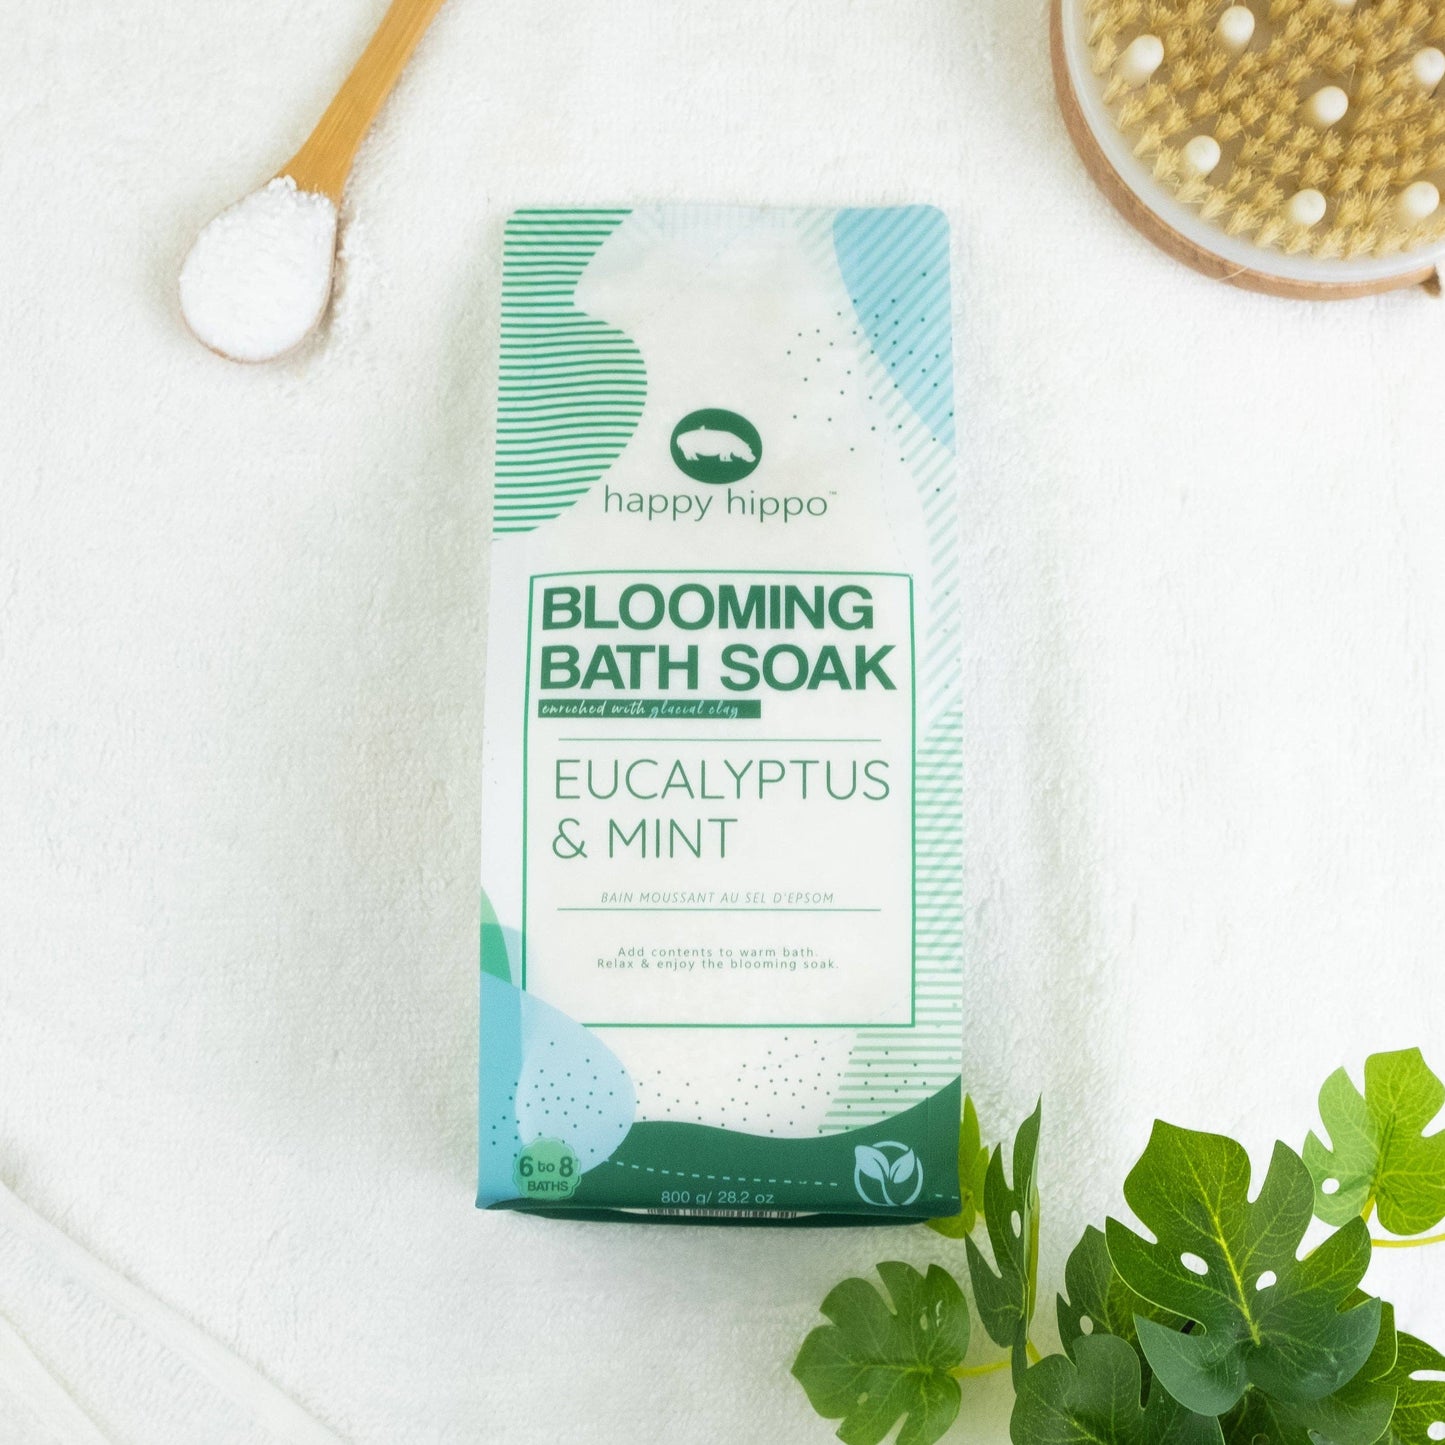 Happy Hippo Bath - Eucalyptus & Mint-Blooming Bath Soak 800g